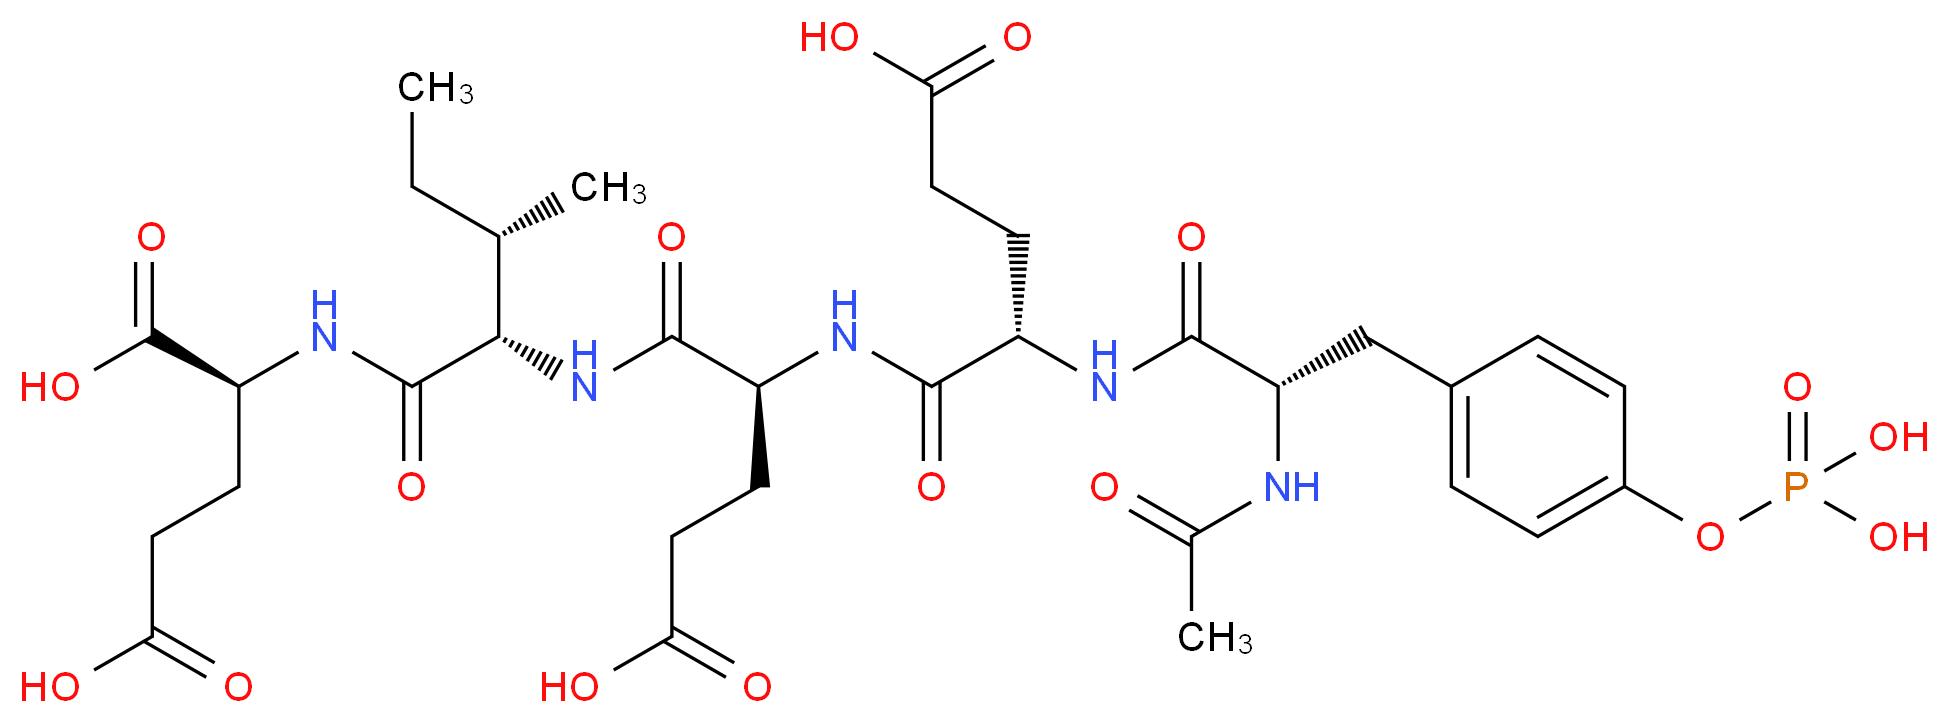 159439-02-8(freebase) molecular structure